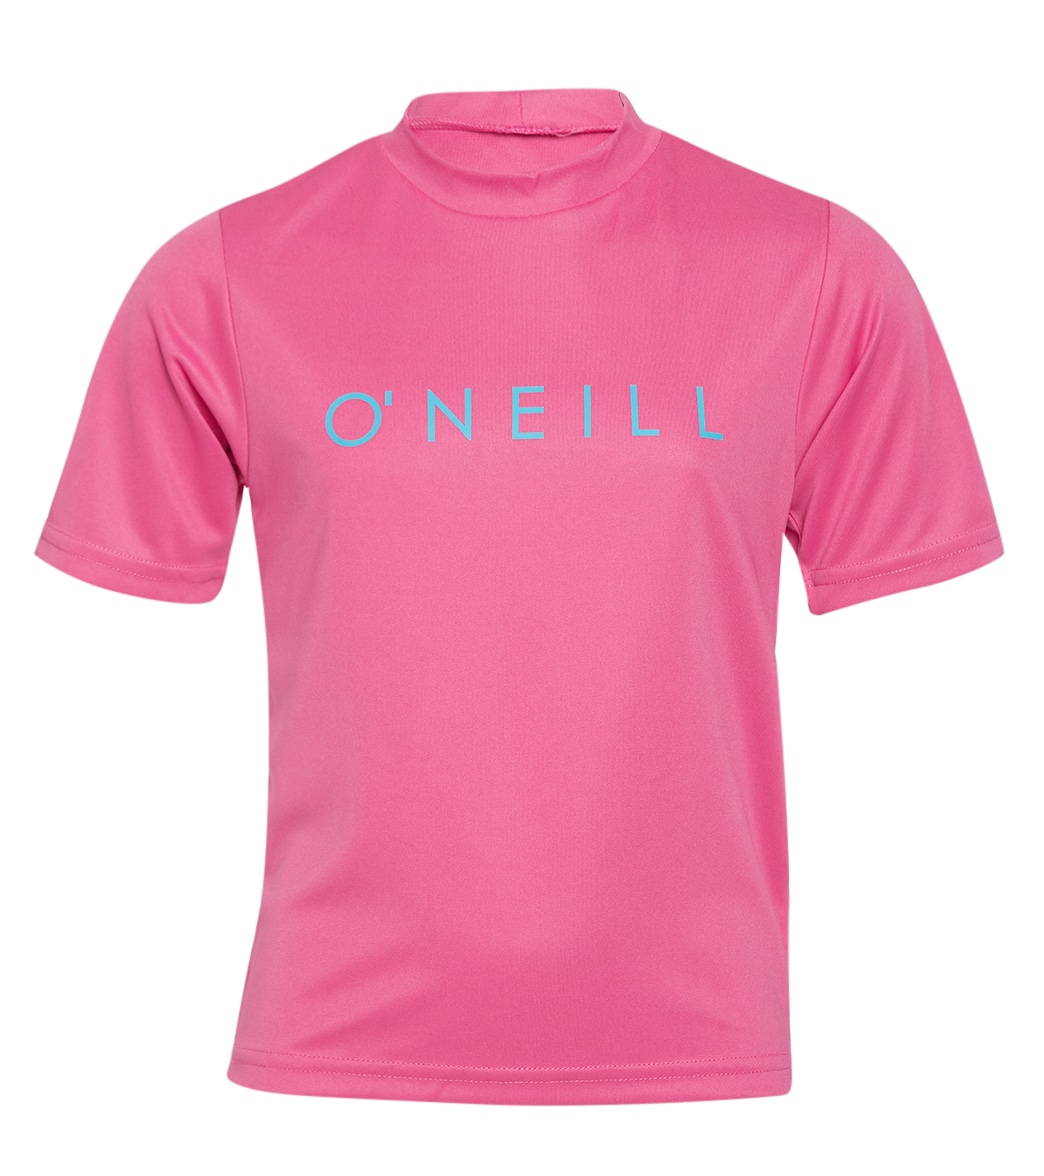 O'neill Youth Basic Upf 30+ Short Sleeve Sun Shirt - Fox Pink 10 Polyester - Swimoutlet.com